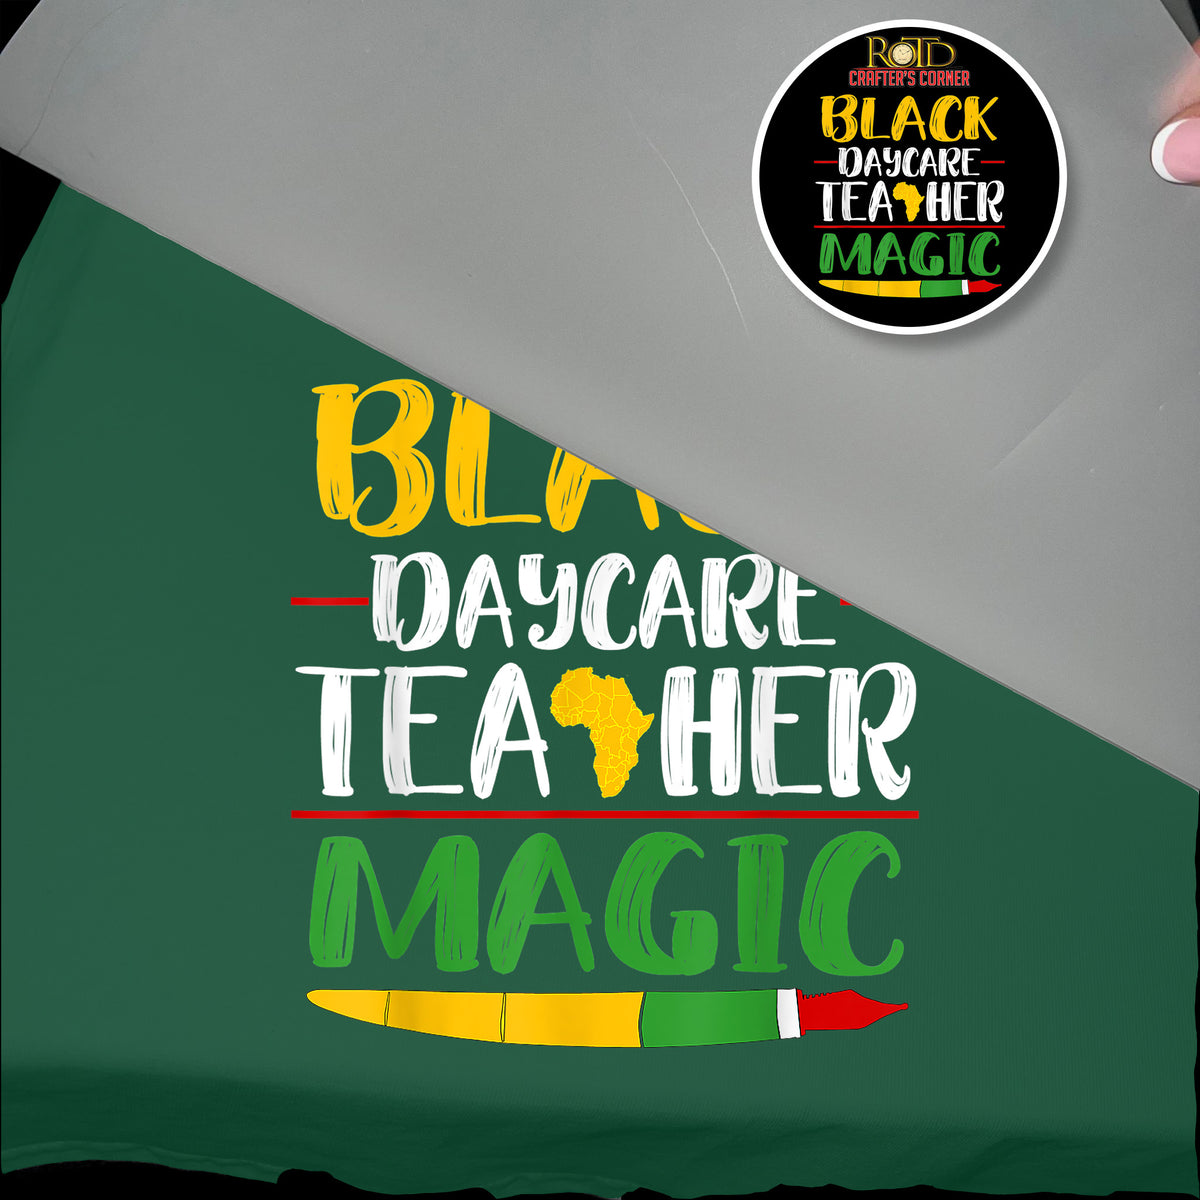 Black Daycare Teacher